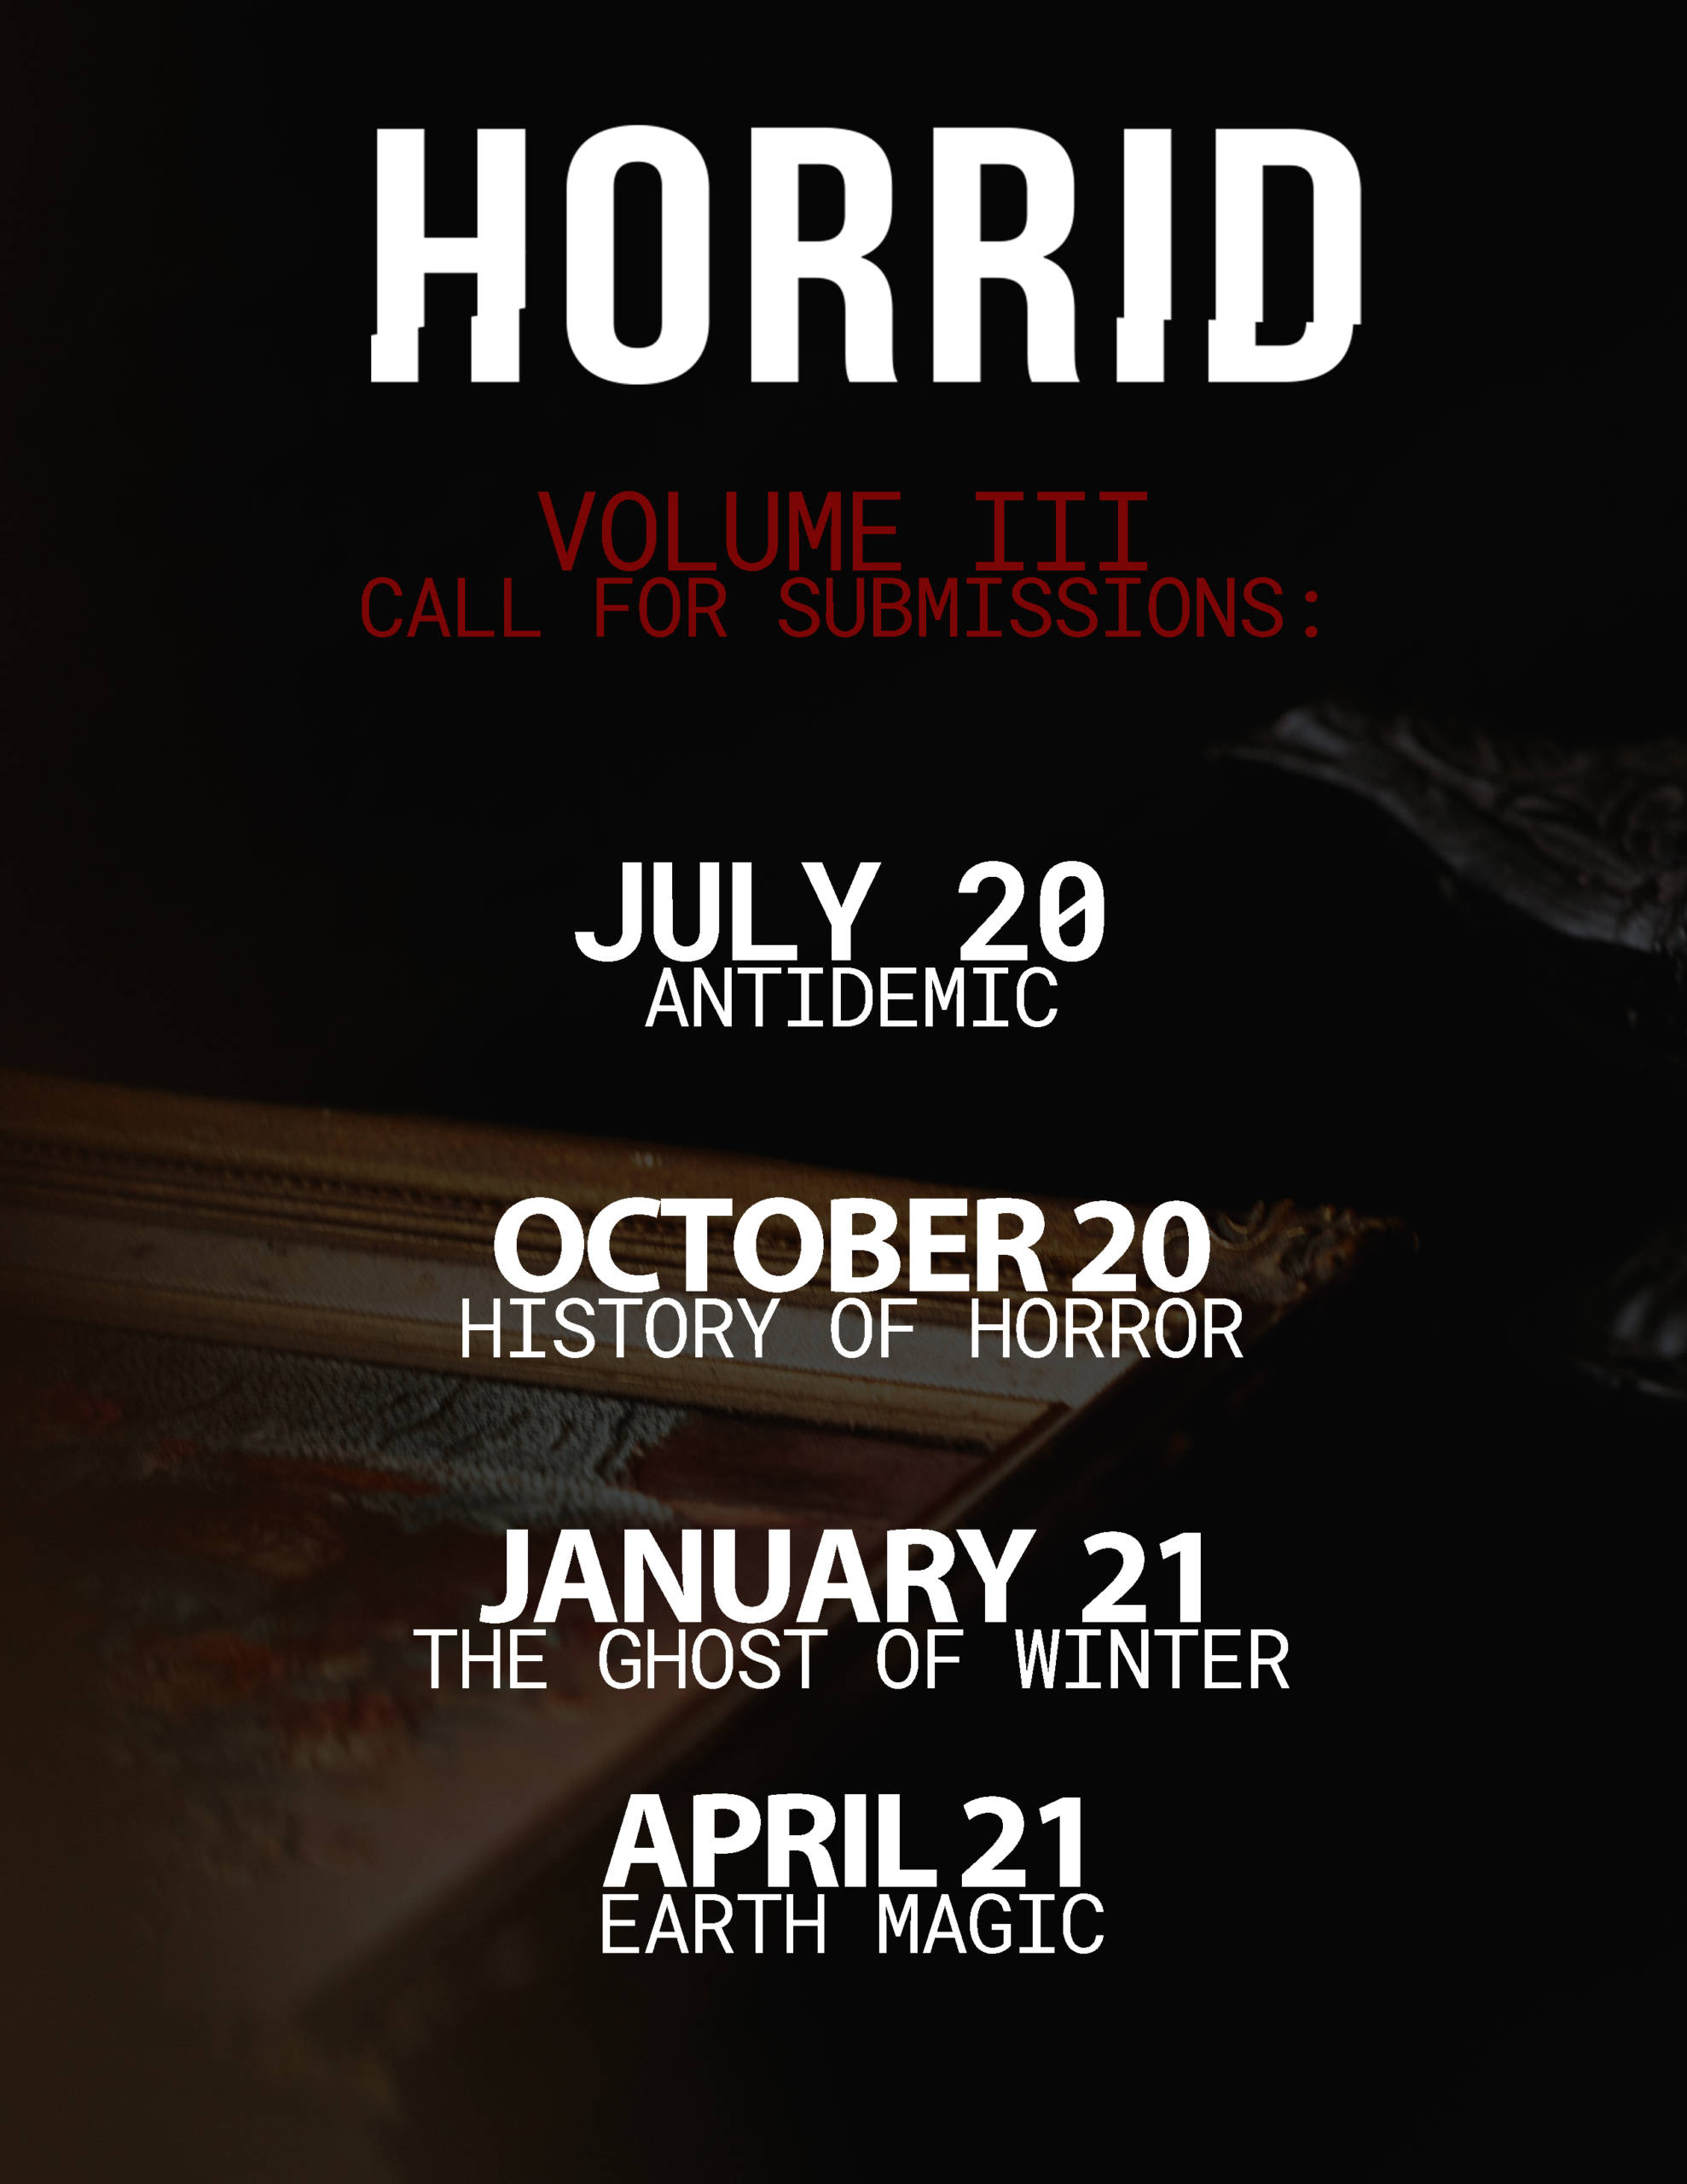 HORRID Magazine Volume III Themes